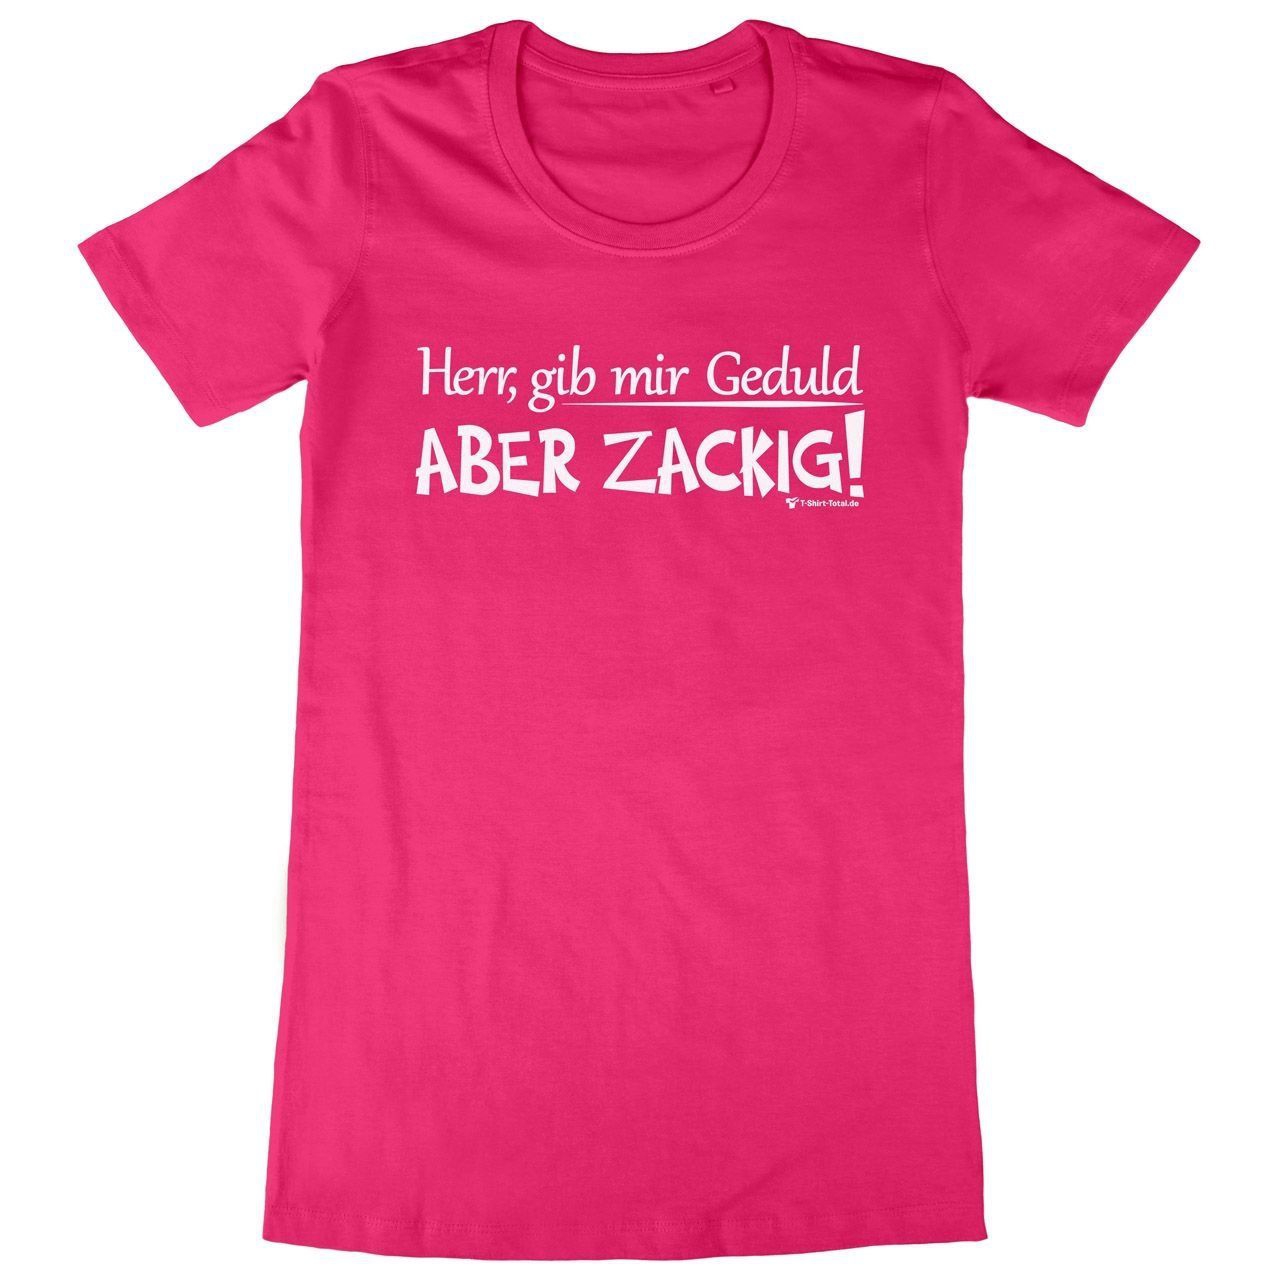 Aber zackig Woman Long Shirt pink Medium